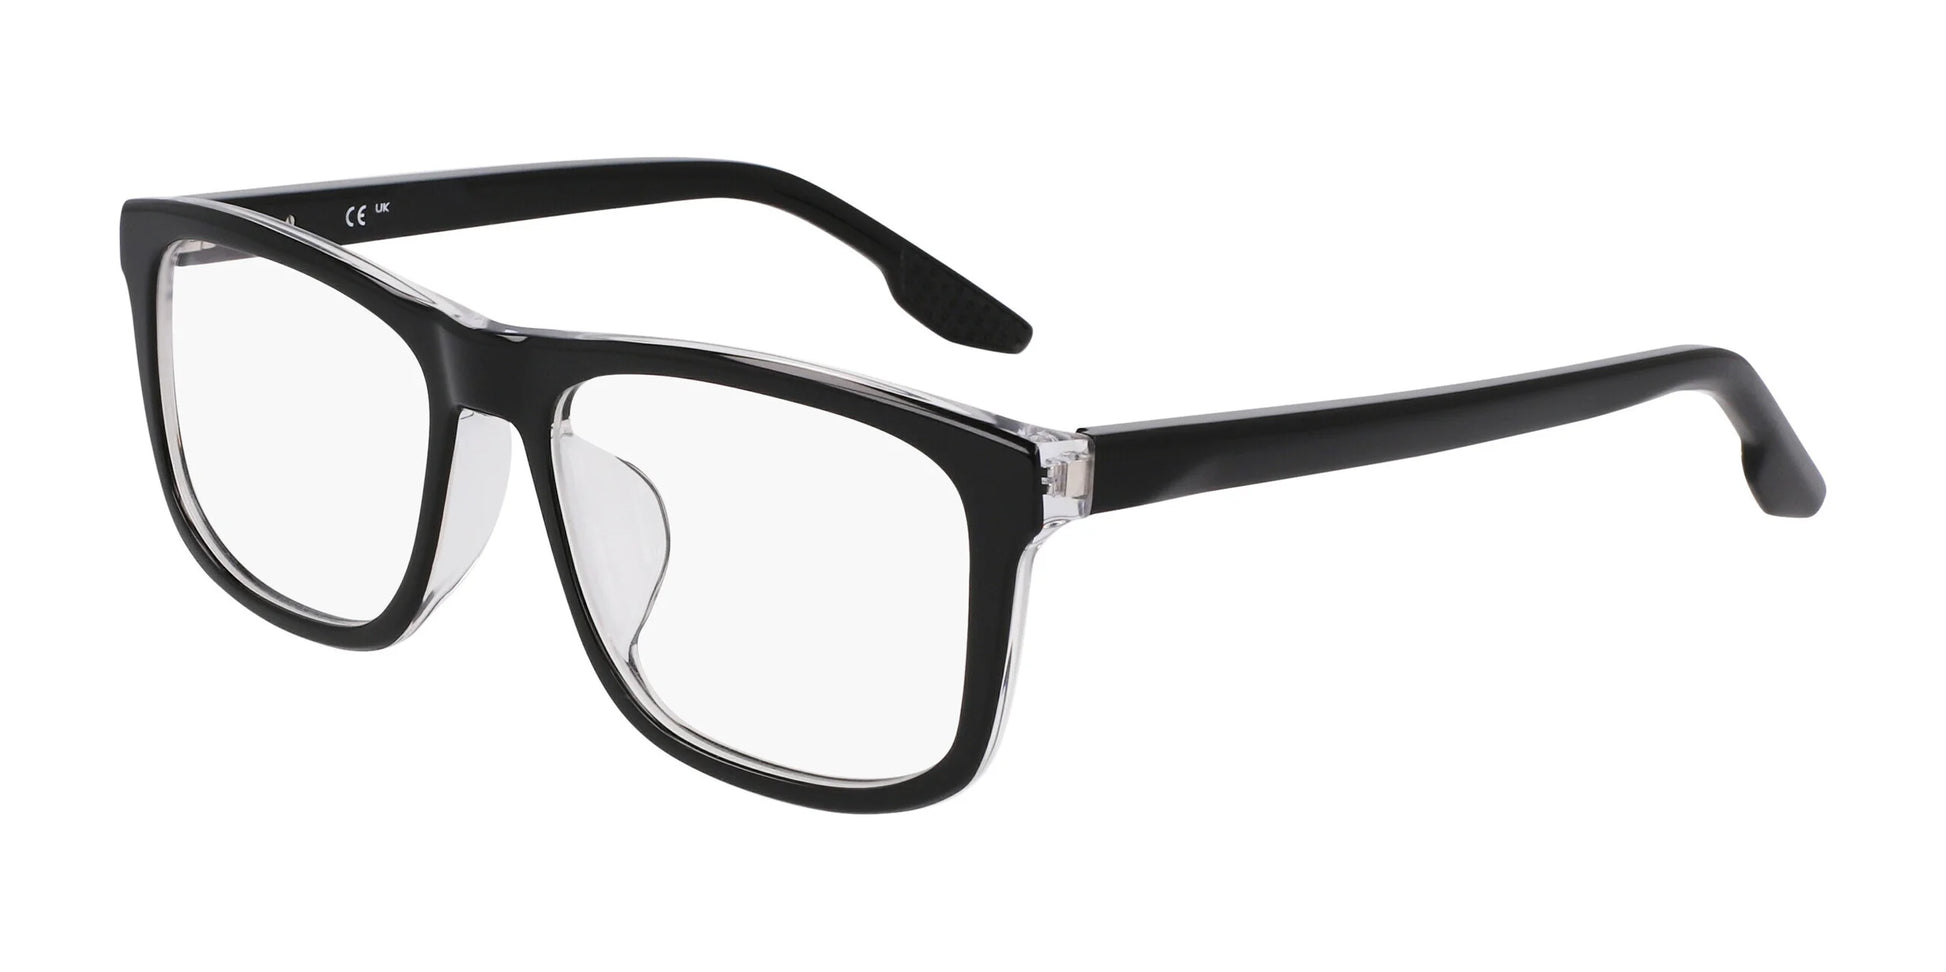 Nike 7163LB Eyeglasses Black / Crystal Clear